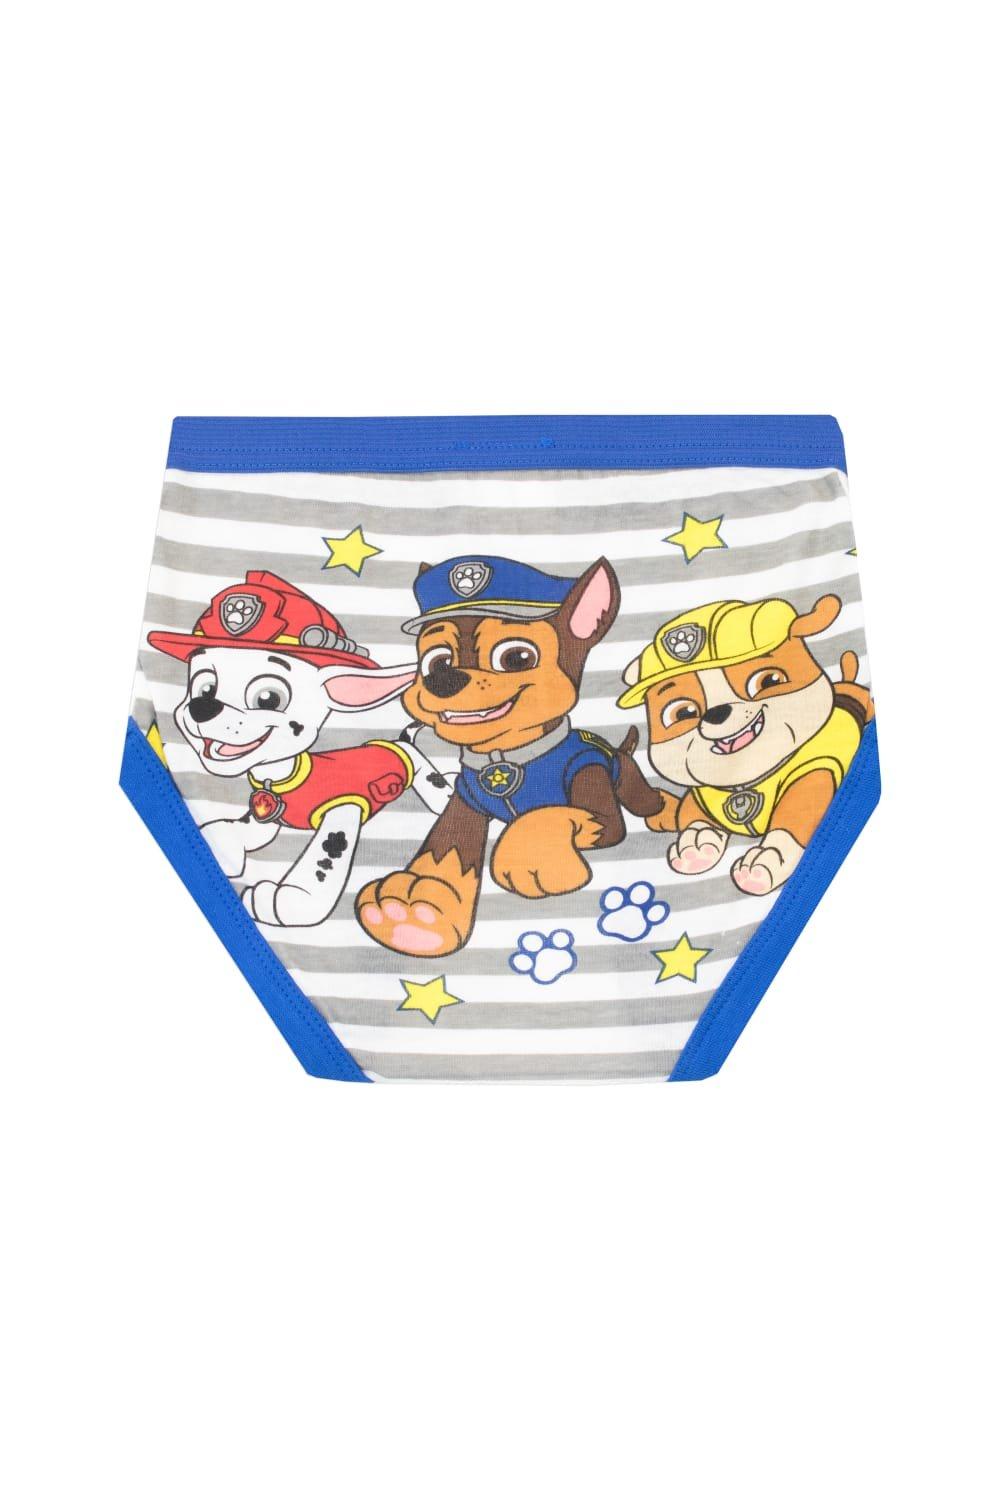 Paw Patrol Underwear 